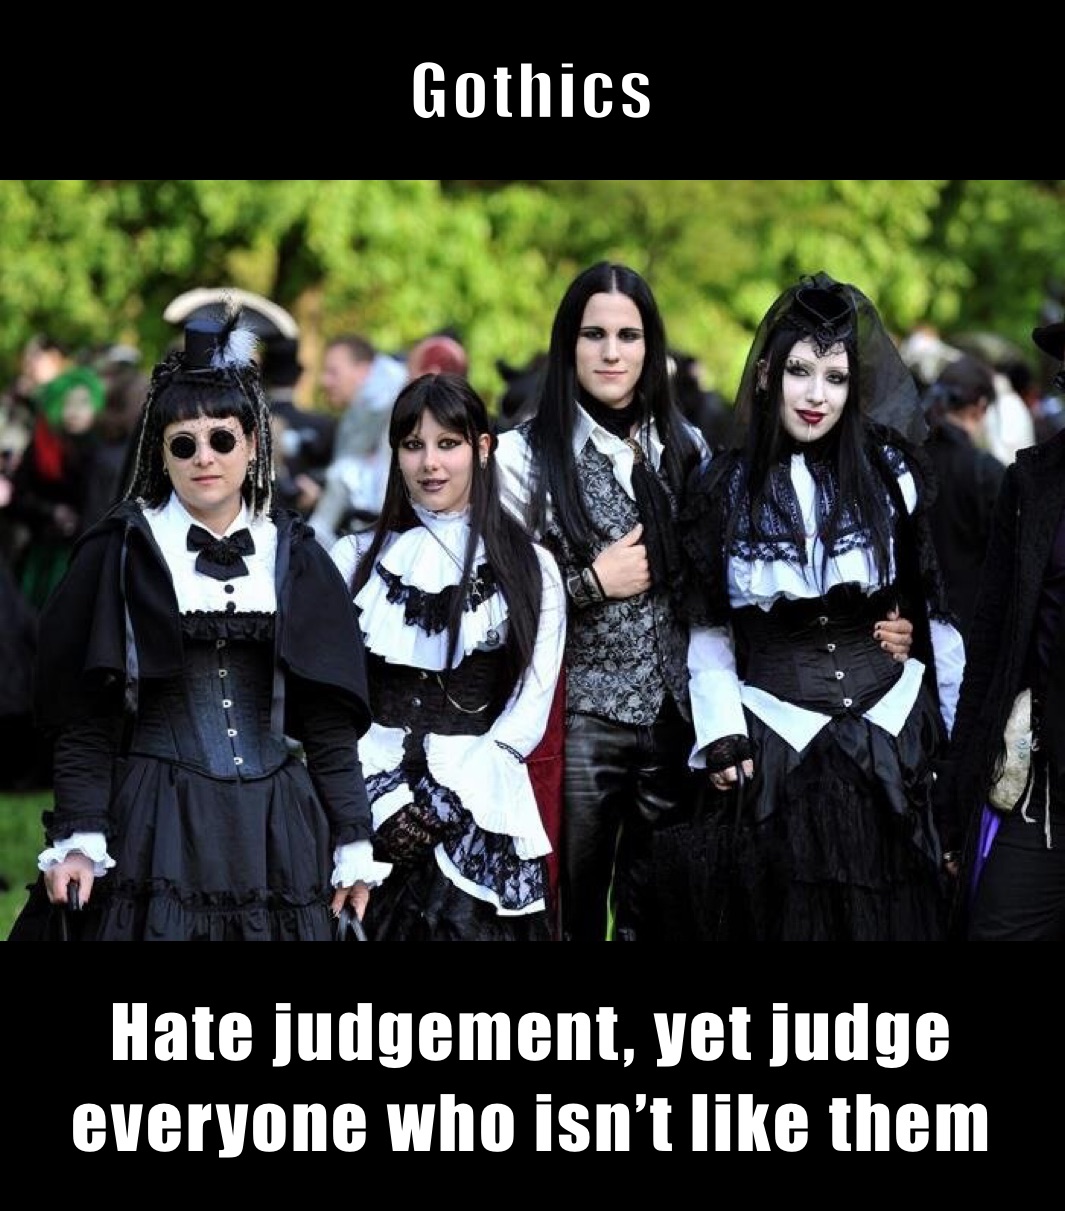 Gothics Hate judgement, yet judge everyone who isn’t like them